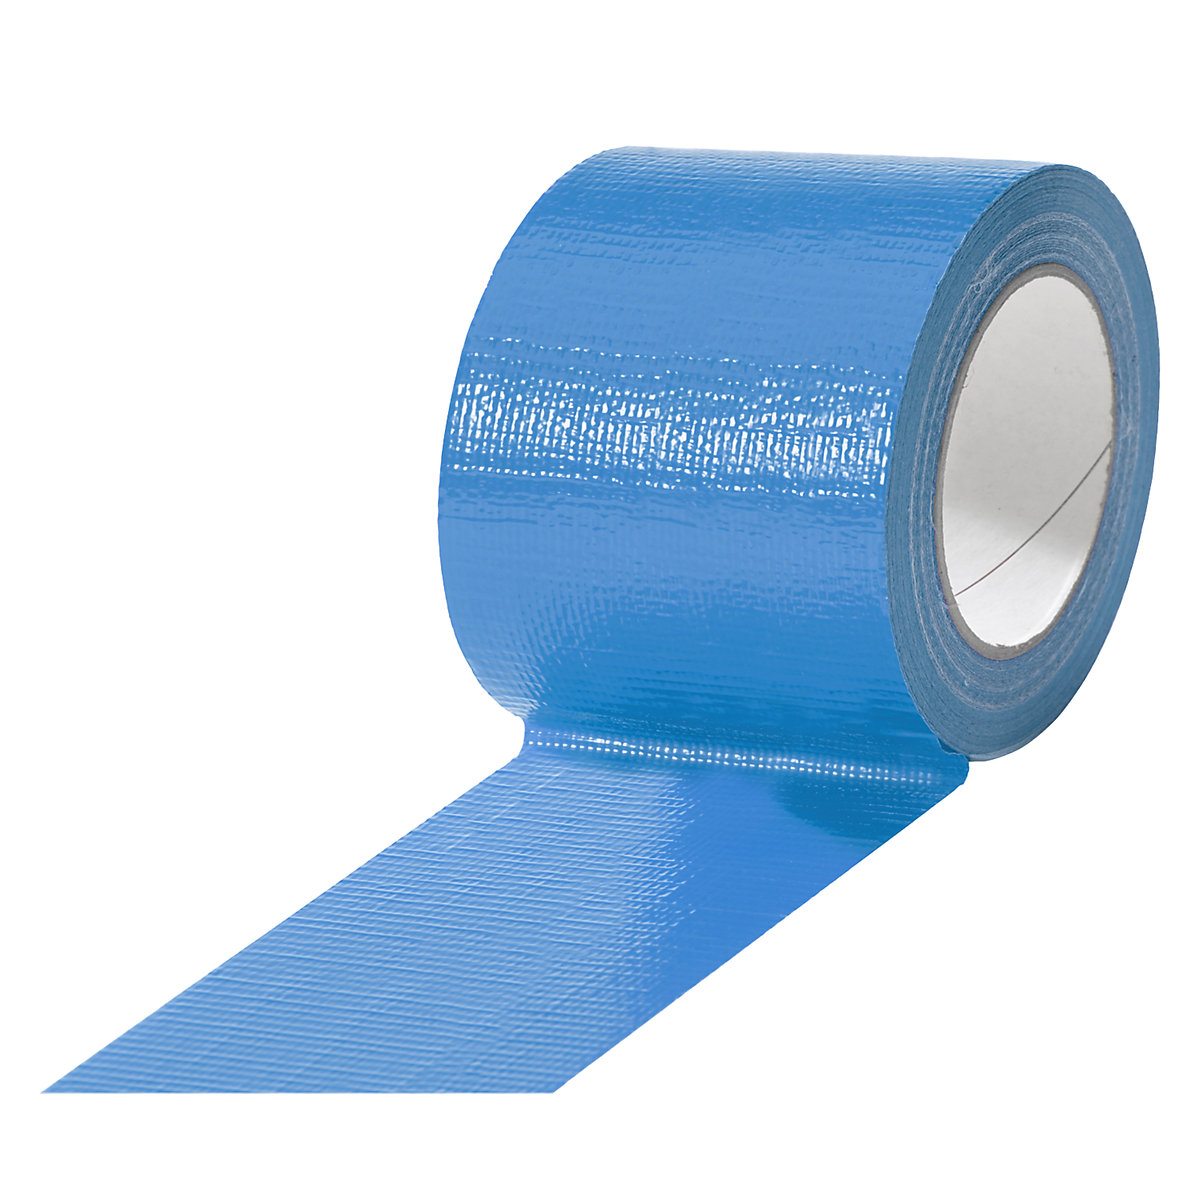 Tkaninová páska, v různých barvách, bal.j. 12 rolí, modrá, šířka pásky 75 mm-2